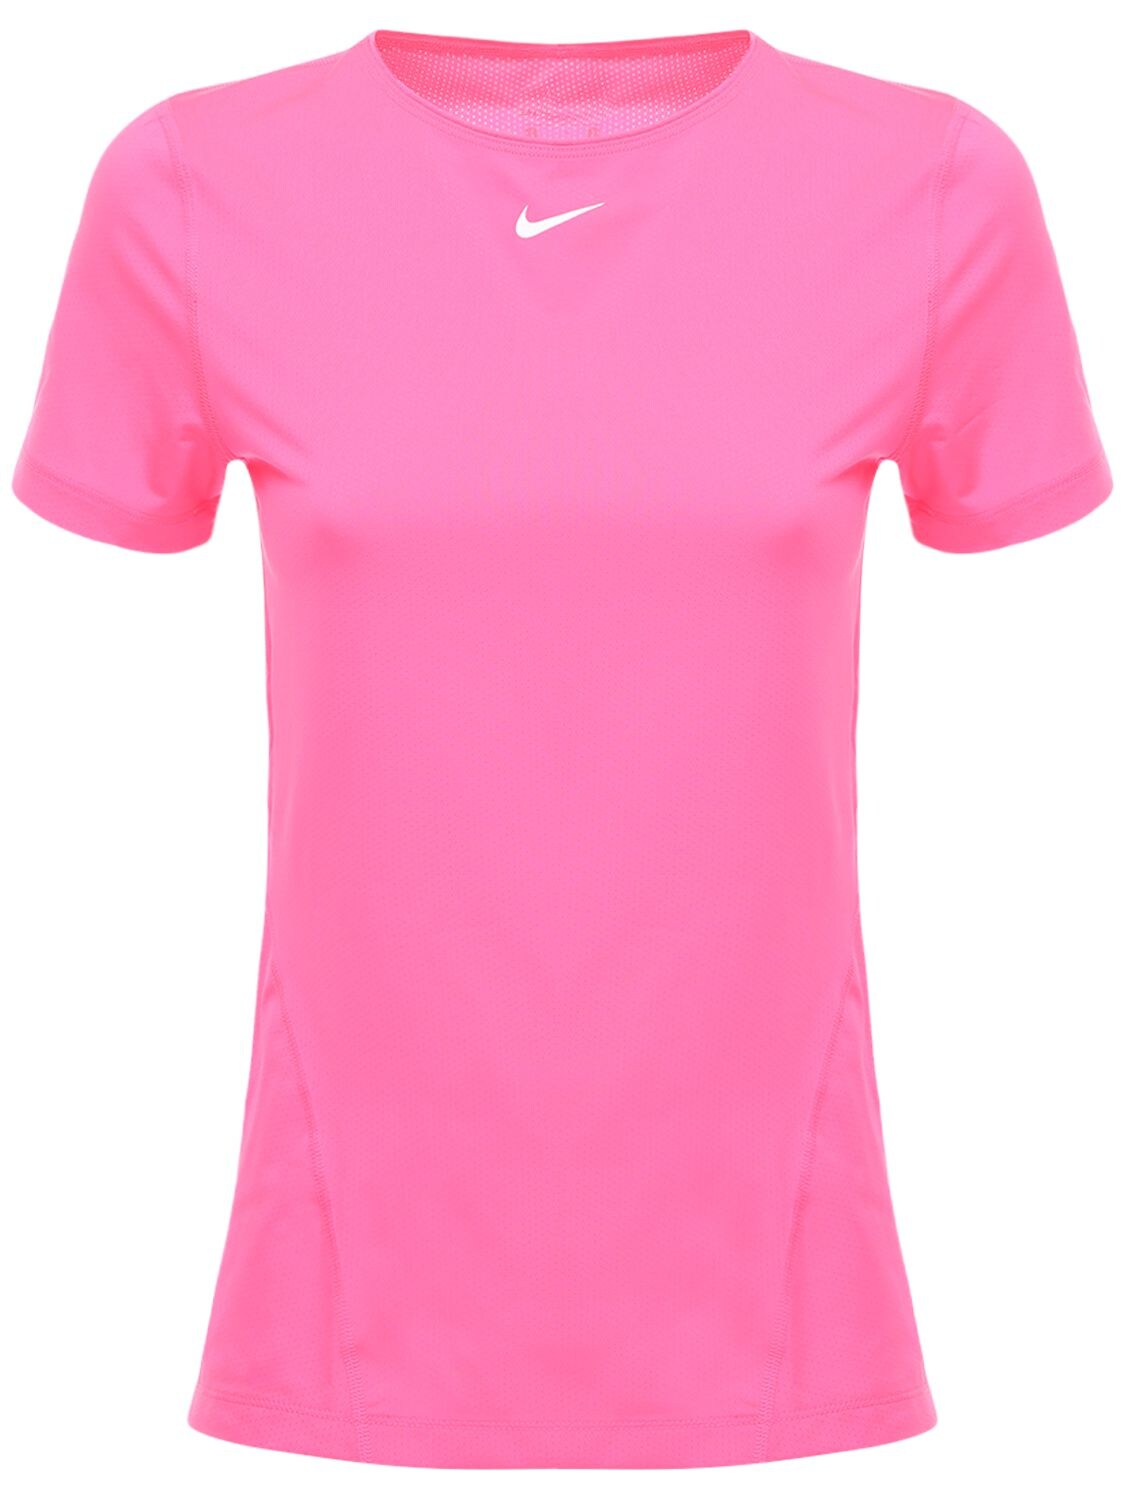 Nike Pro Tech Training T-shirt In Hyper Pink